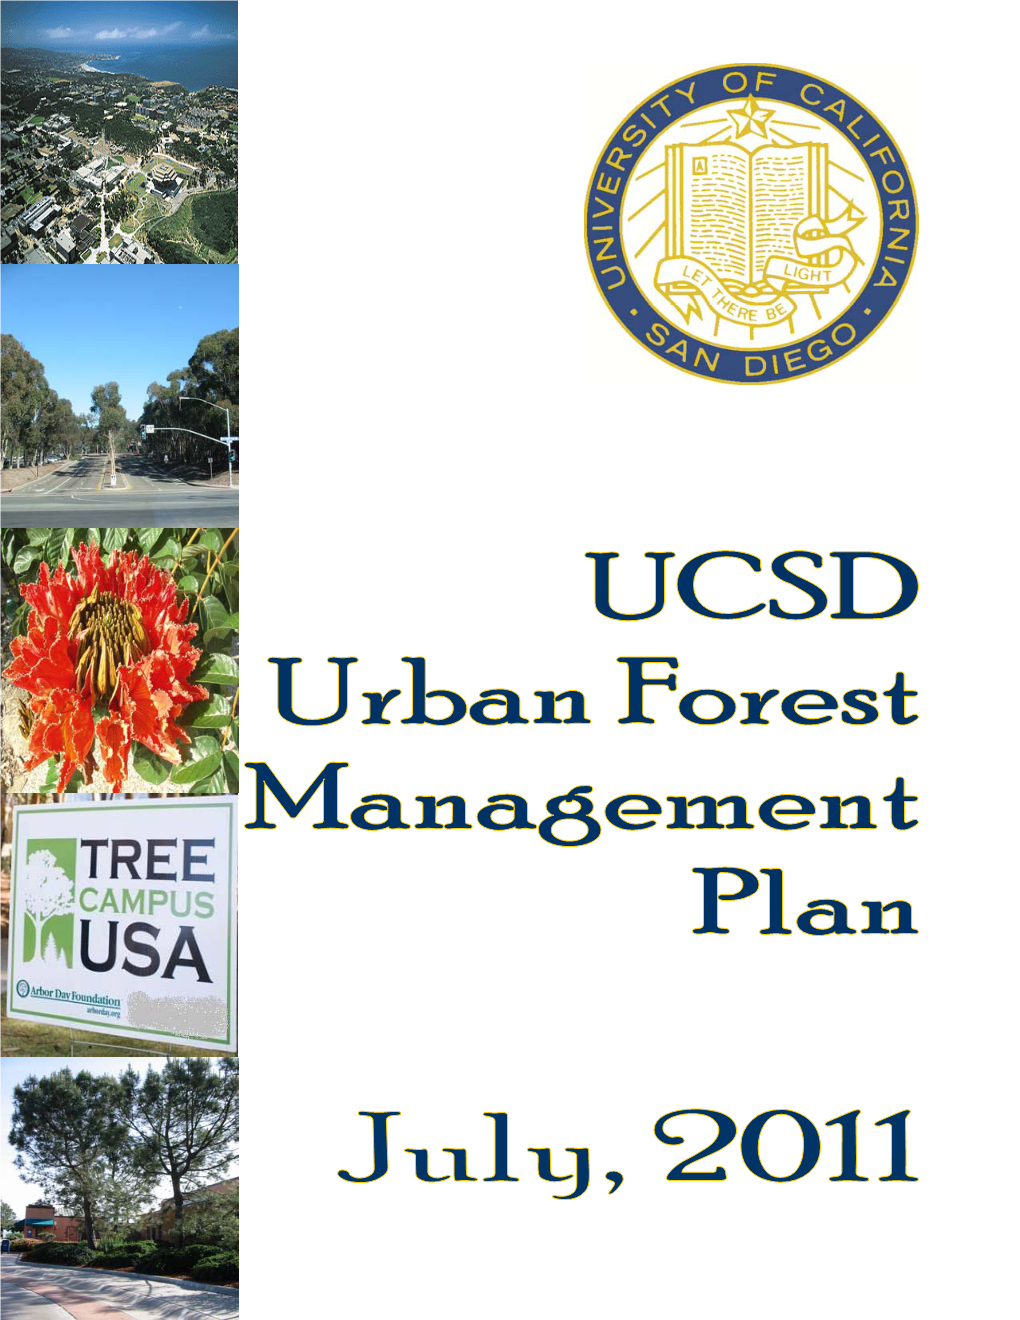 UCSD Urban Forest Management Plan